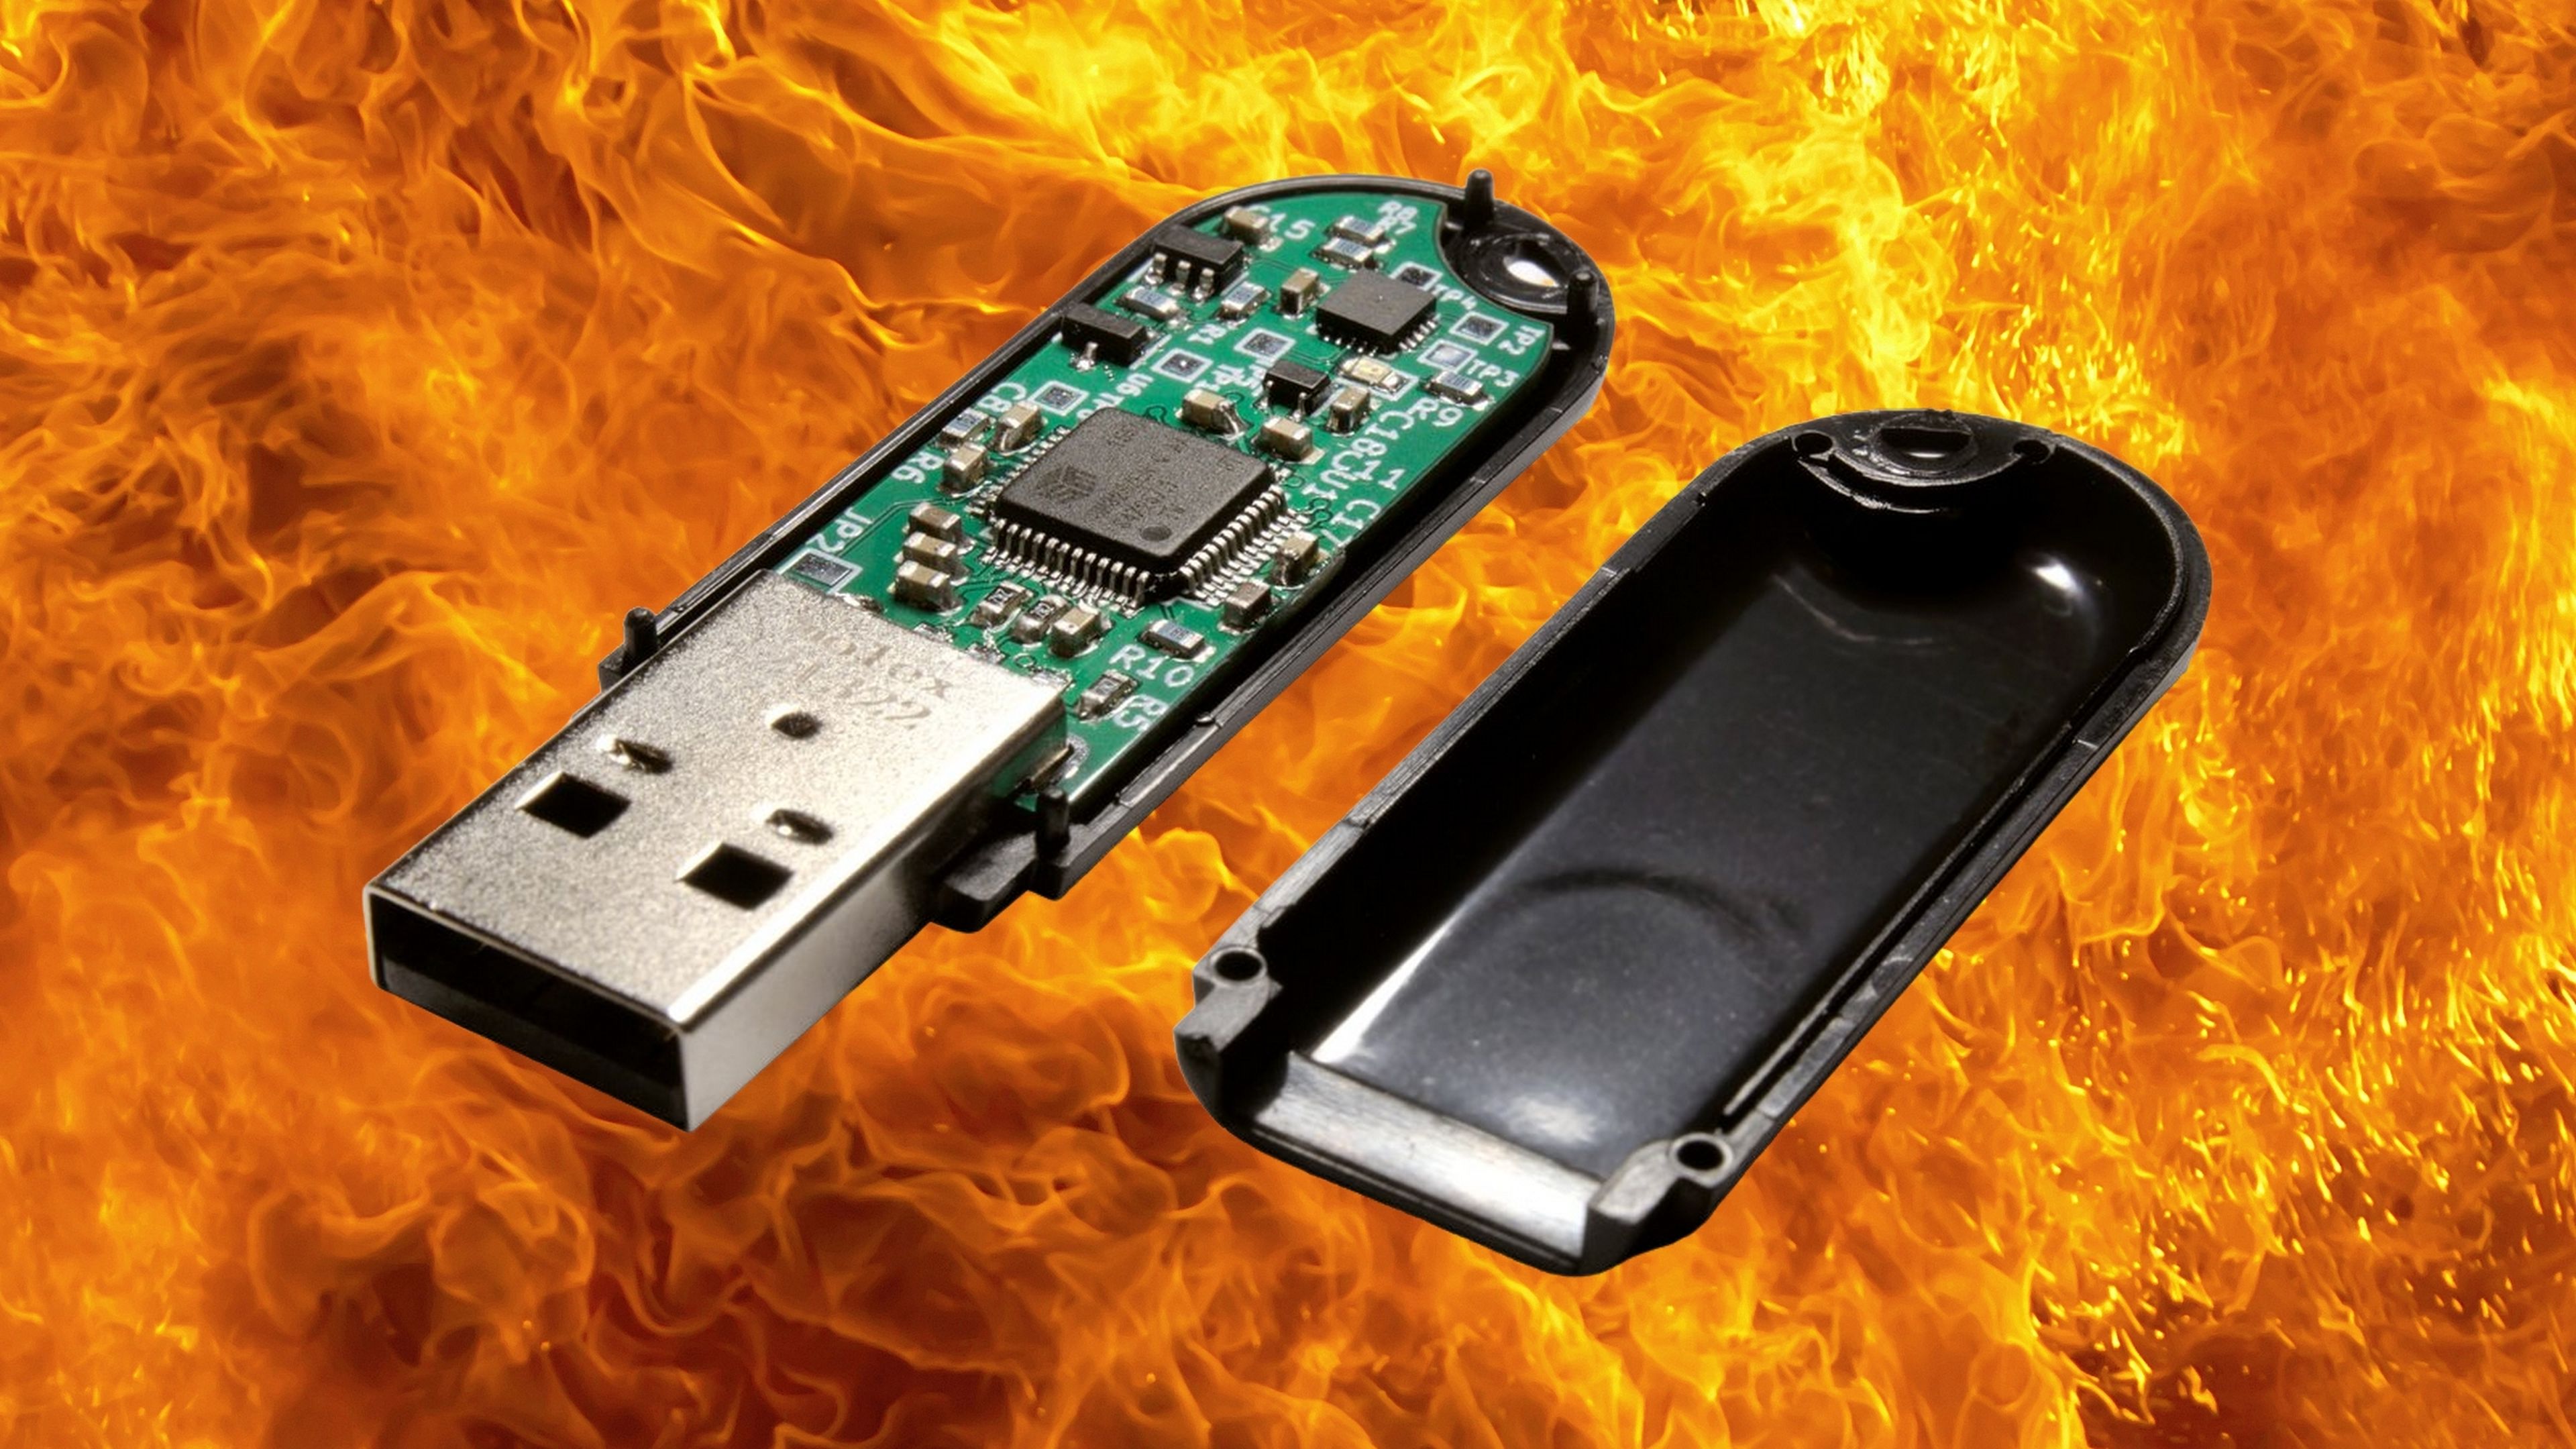 Ovrdrive USB, el pendrive que se autodestruye calentándose a 100 grados centígrados